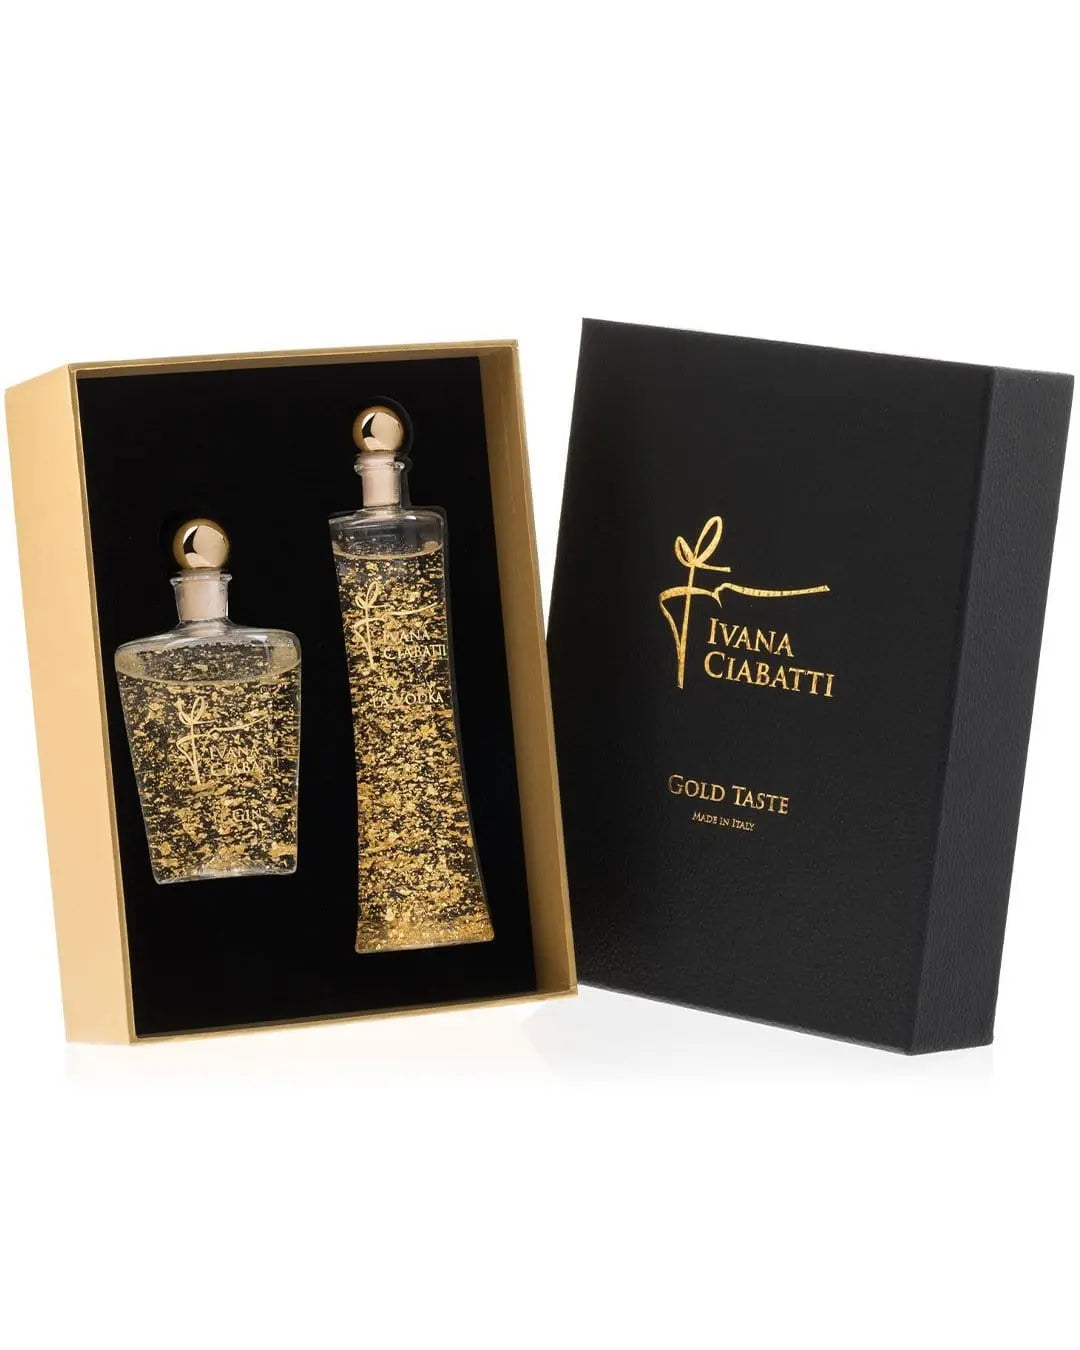 Ivana Ciabatti Gold Taste Exclusive Gift Set, 2 x 20 cl Gin